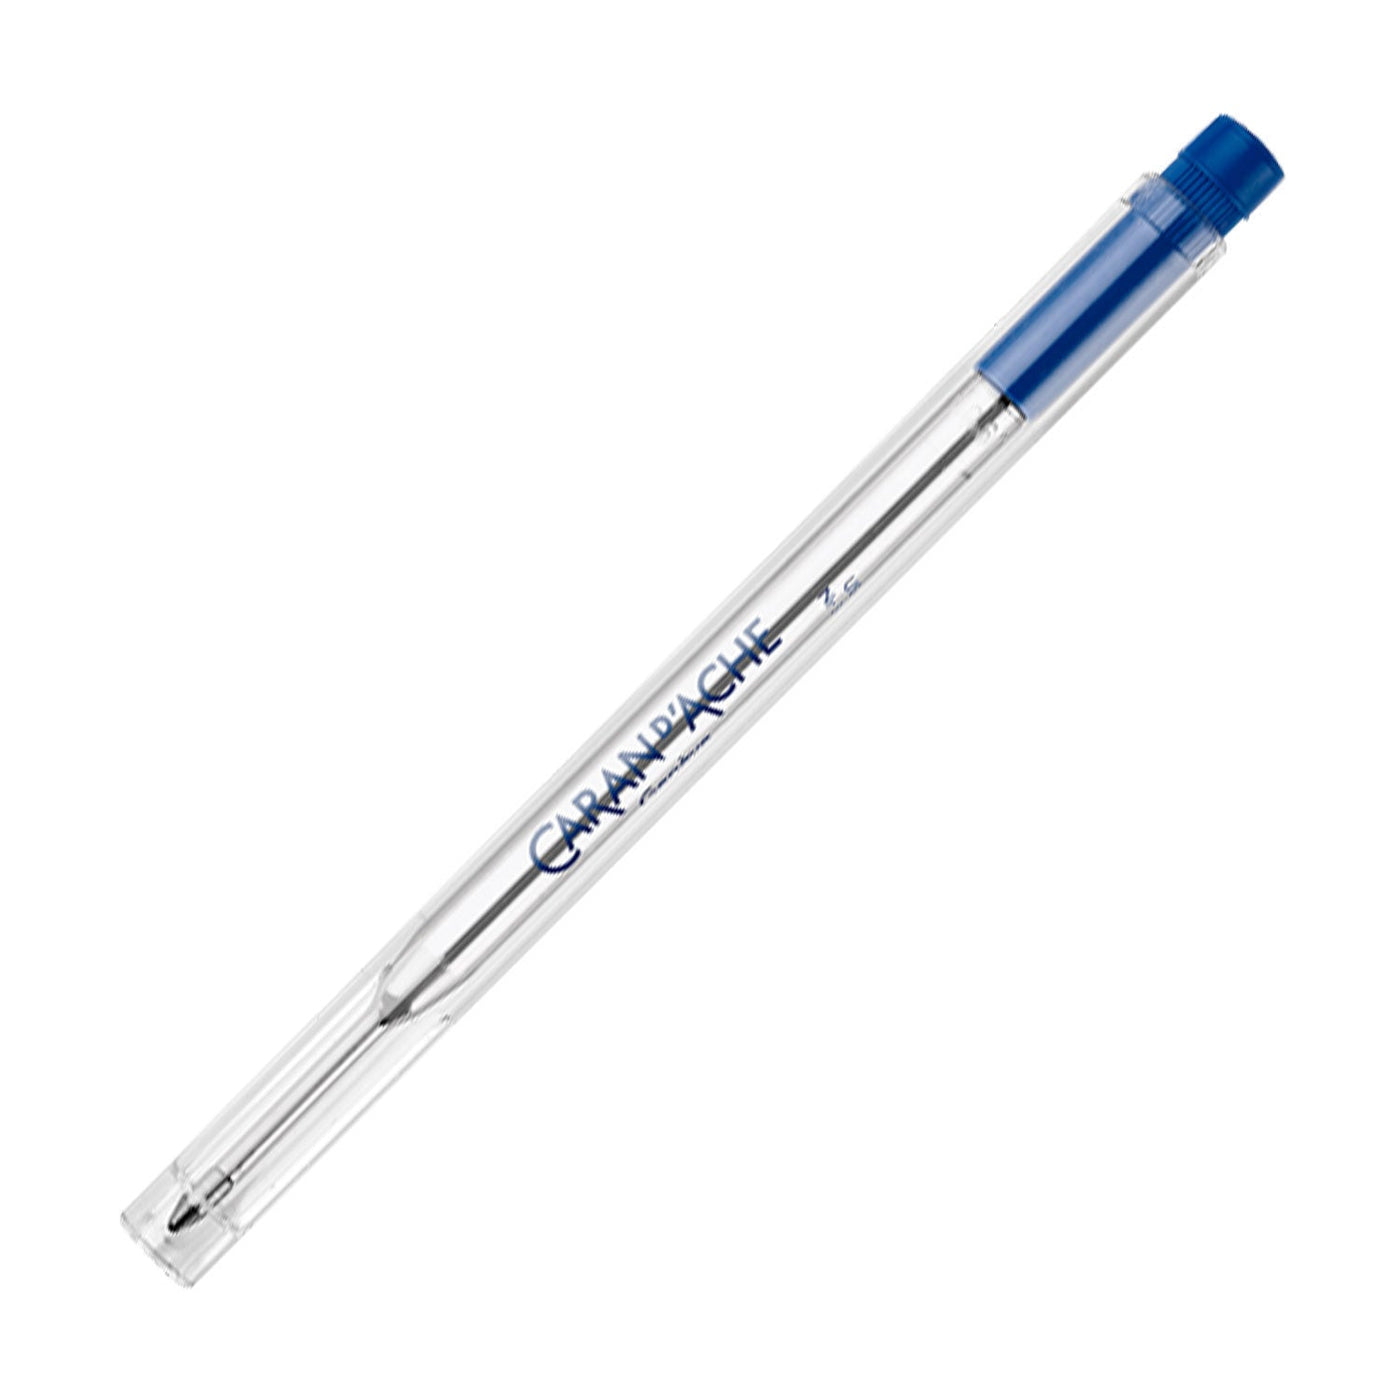 Caran d'Ache 8422.000 Goliath Ball Pen Medium Refill - Blue 1